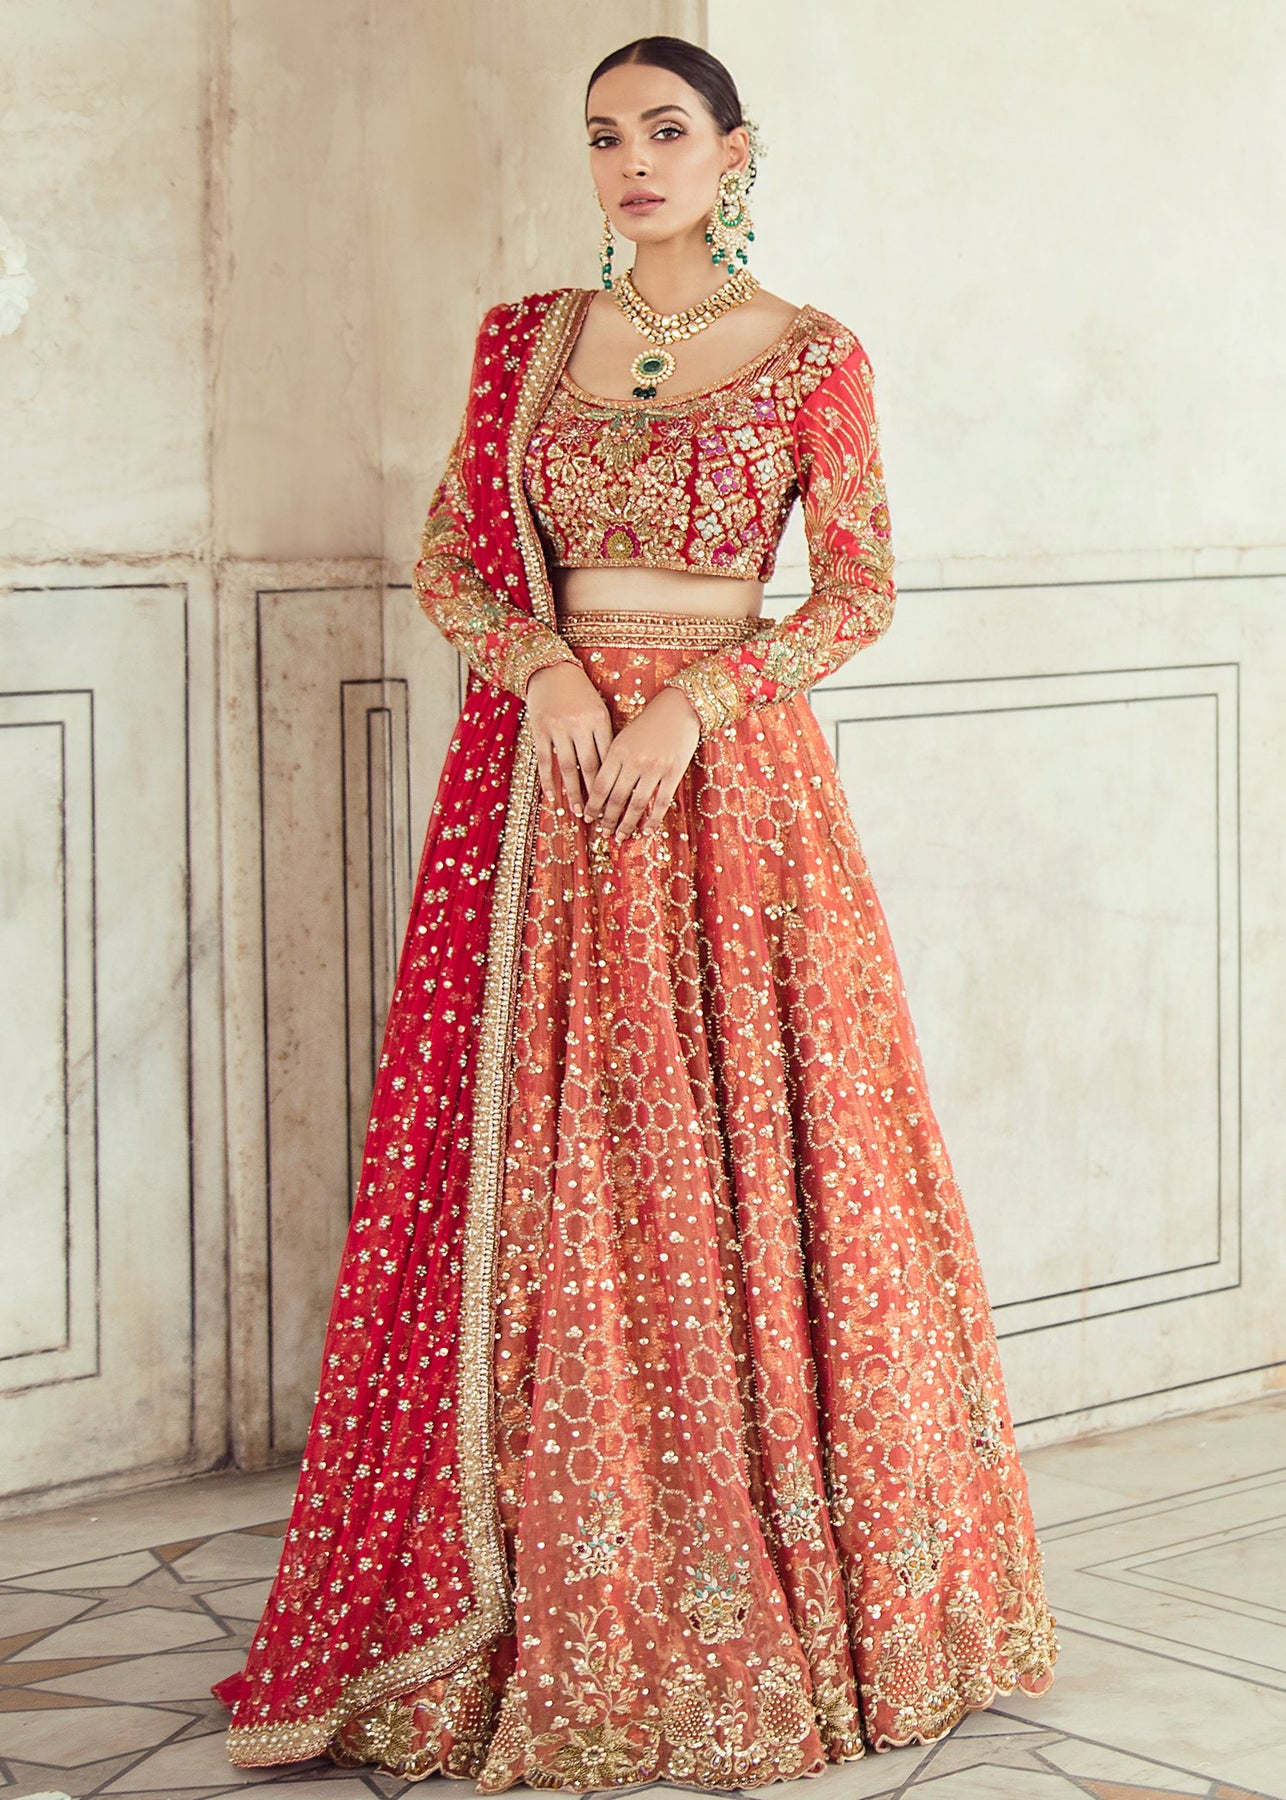 Elegant Pakistani Bridal Lehnga Dress For Wedding Nameera By Farooq 9599